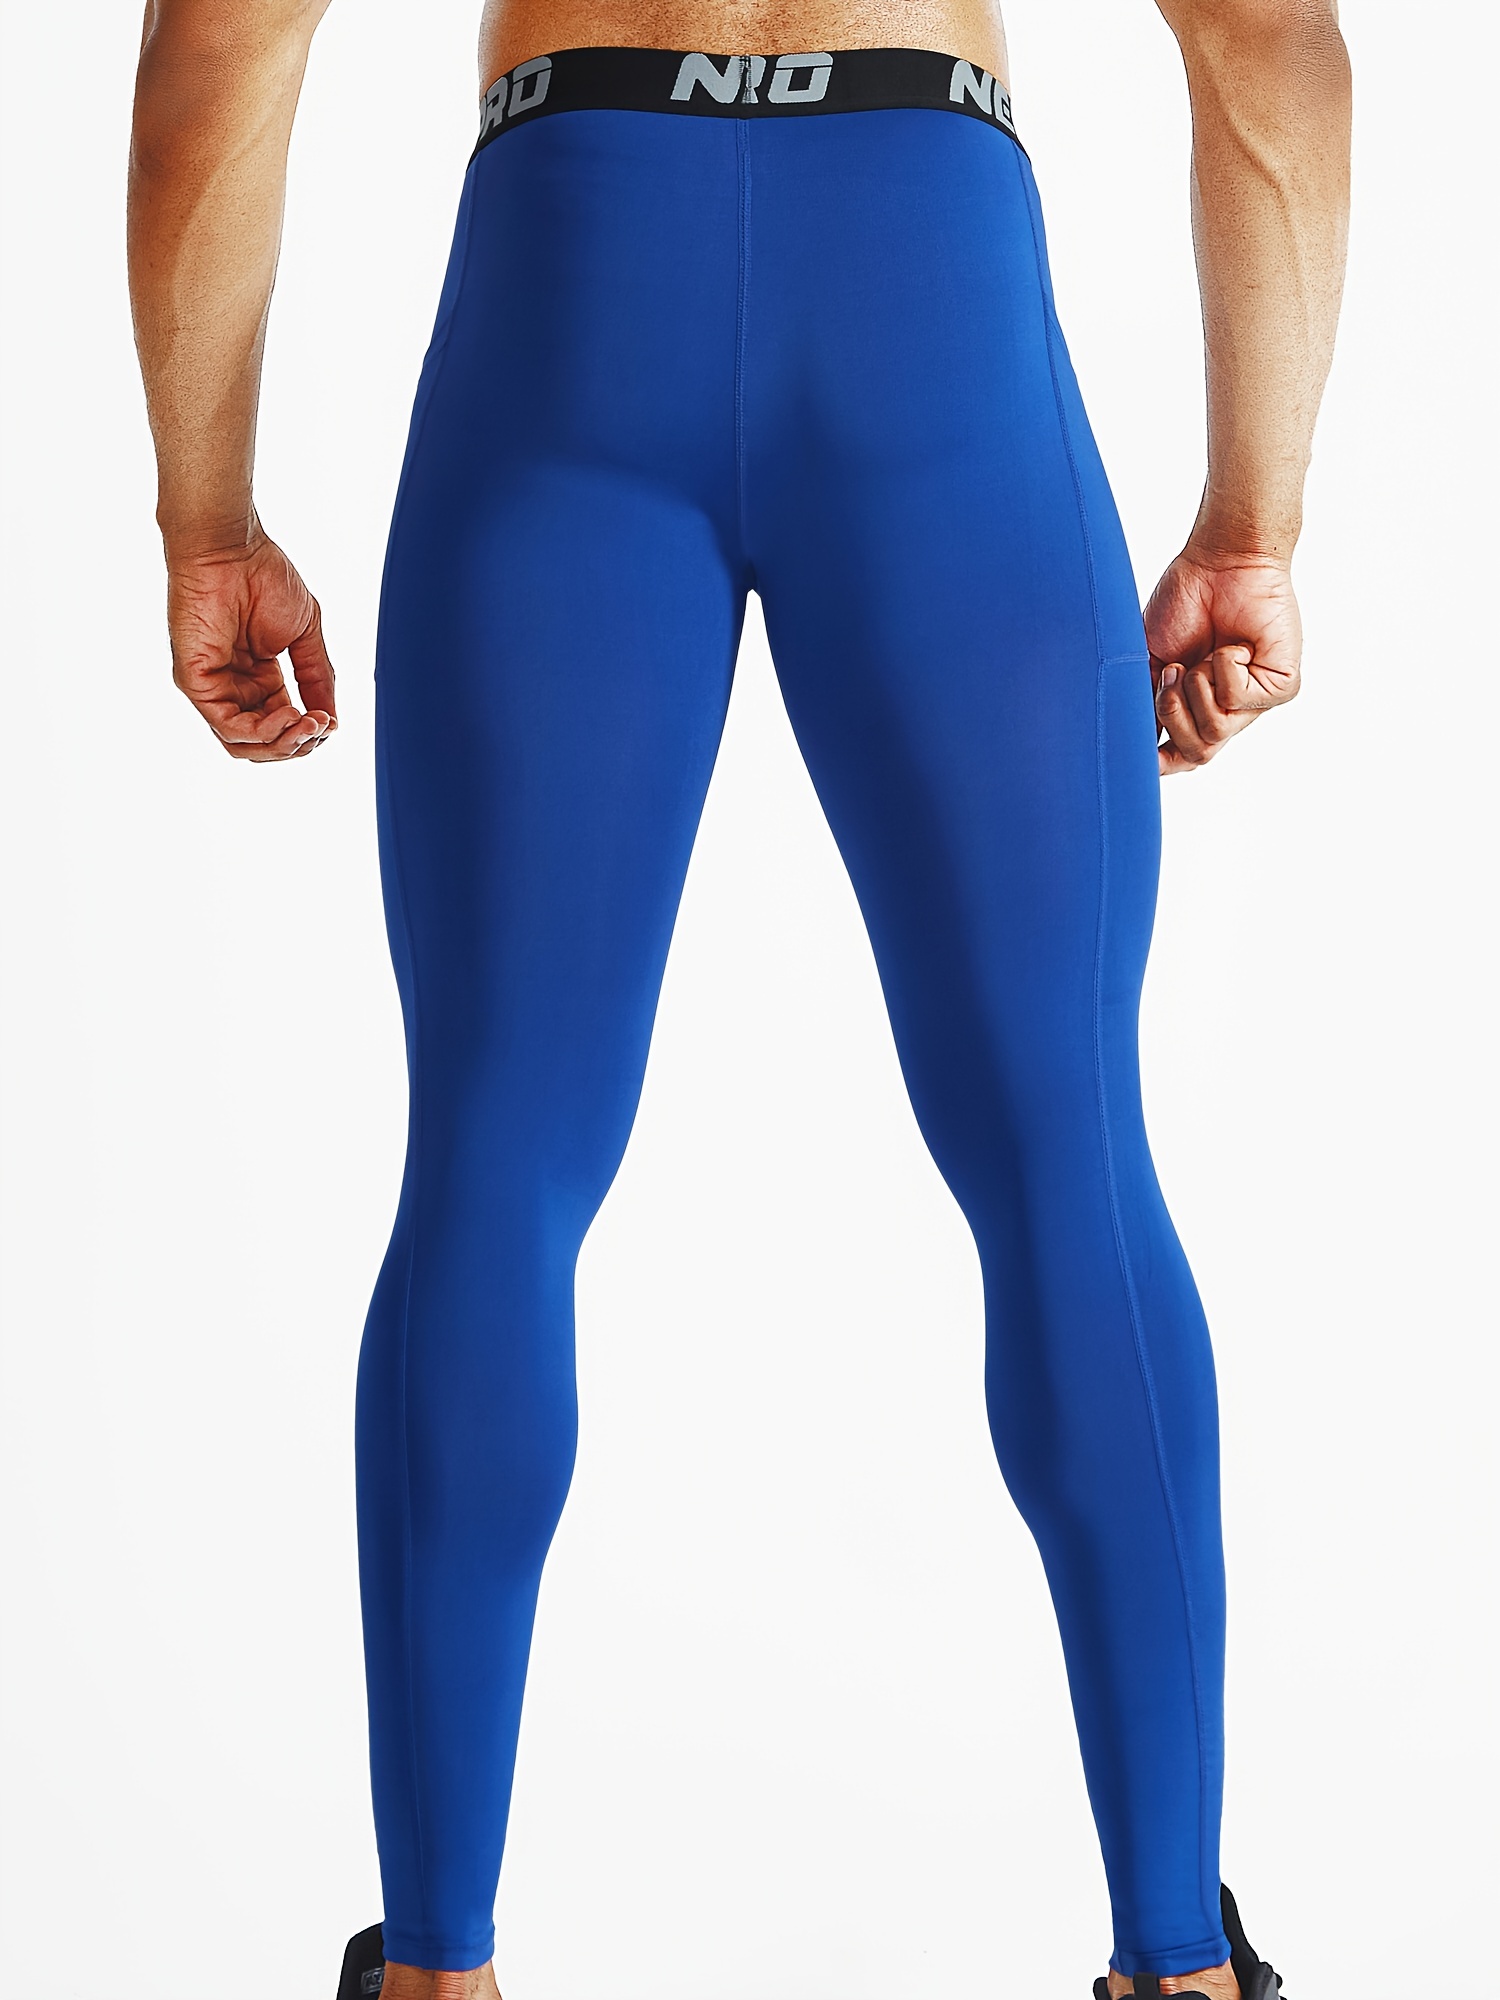 Mens compression leggings Under Armour HG ARMOUR LEGGINGS blue